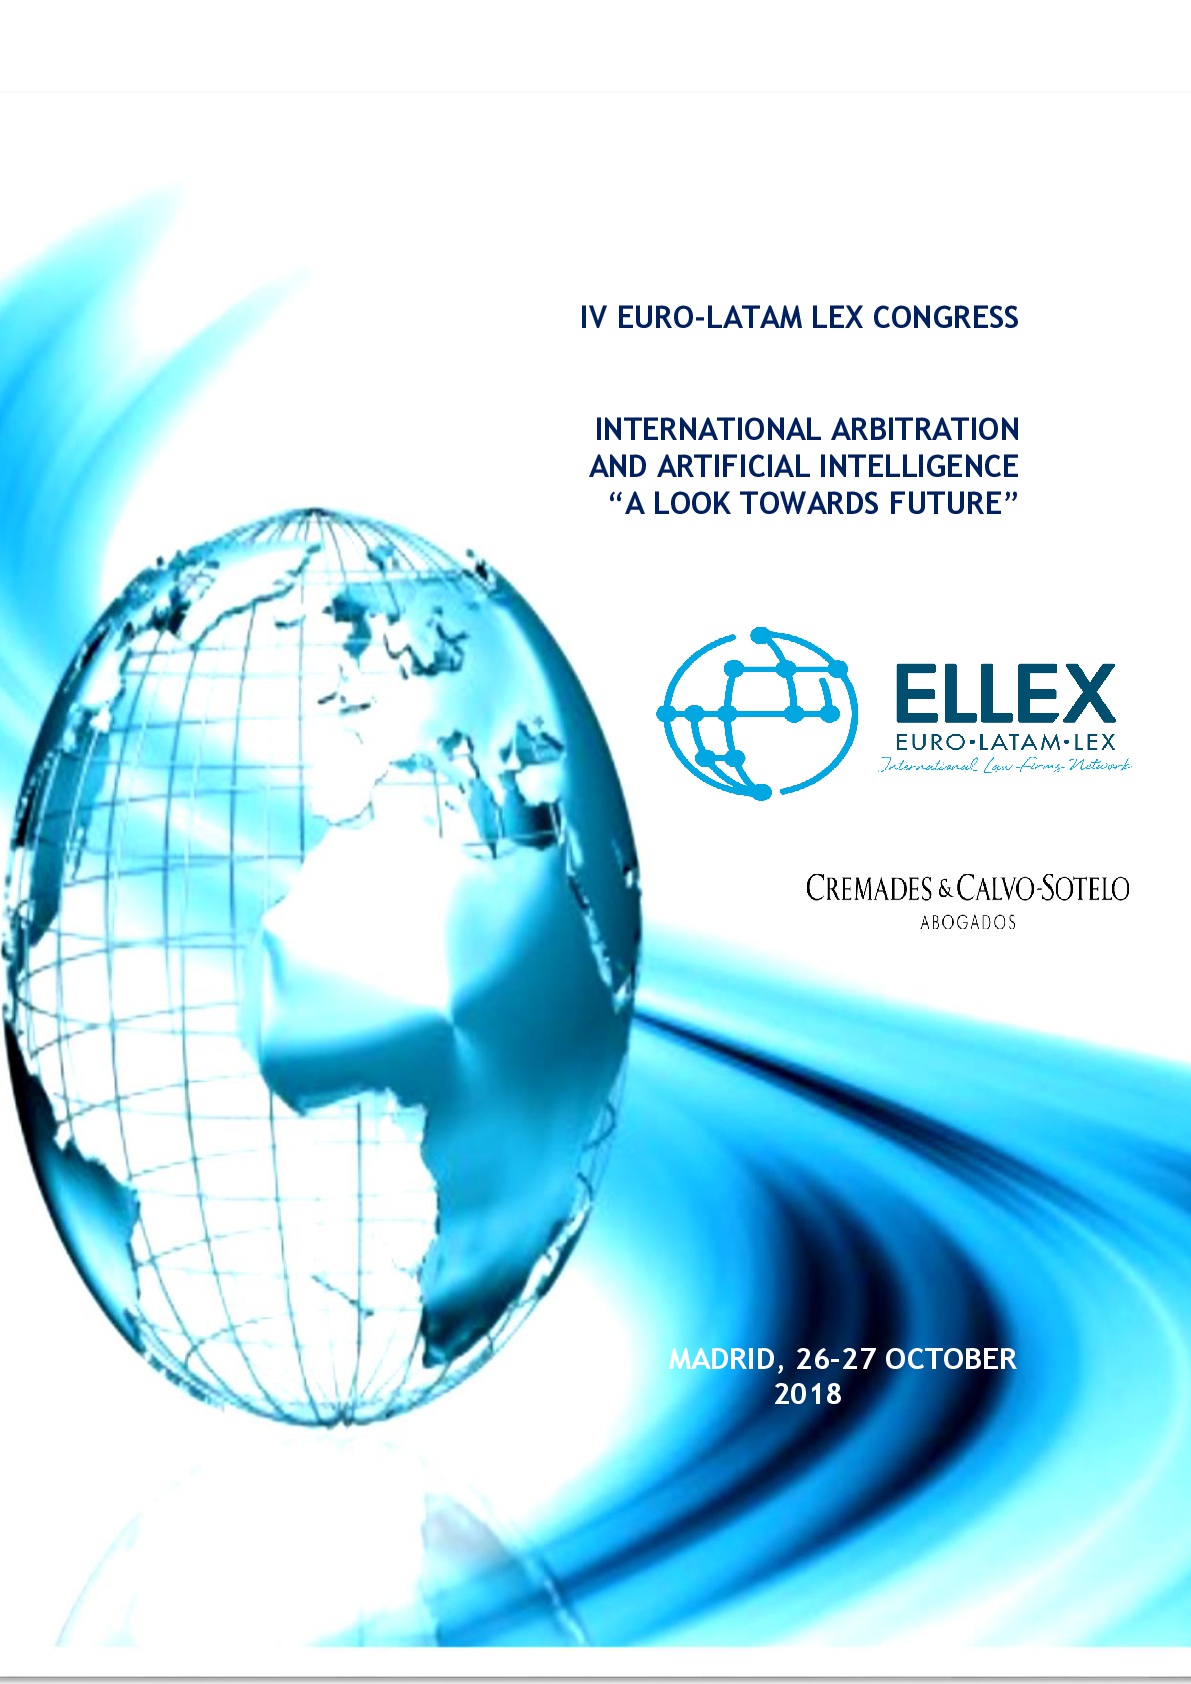 Madrid 26-27 ottobre 2018: IV Euro-Latam Lex Congress